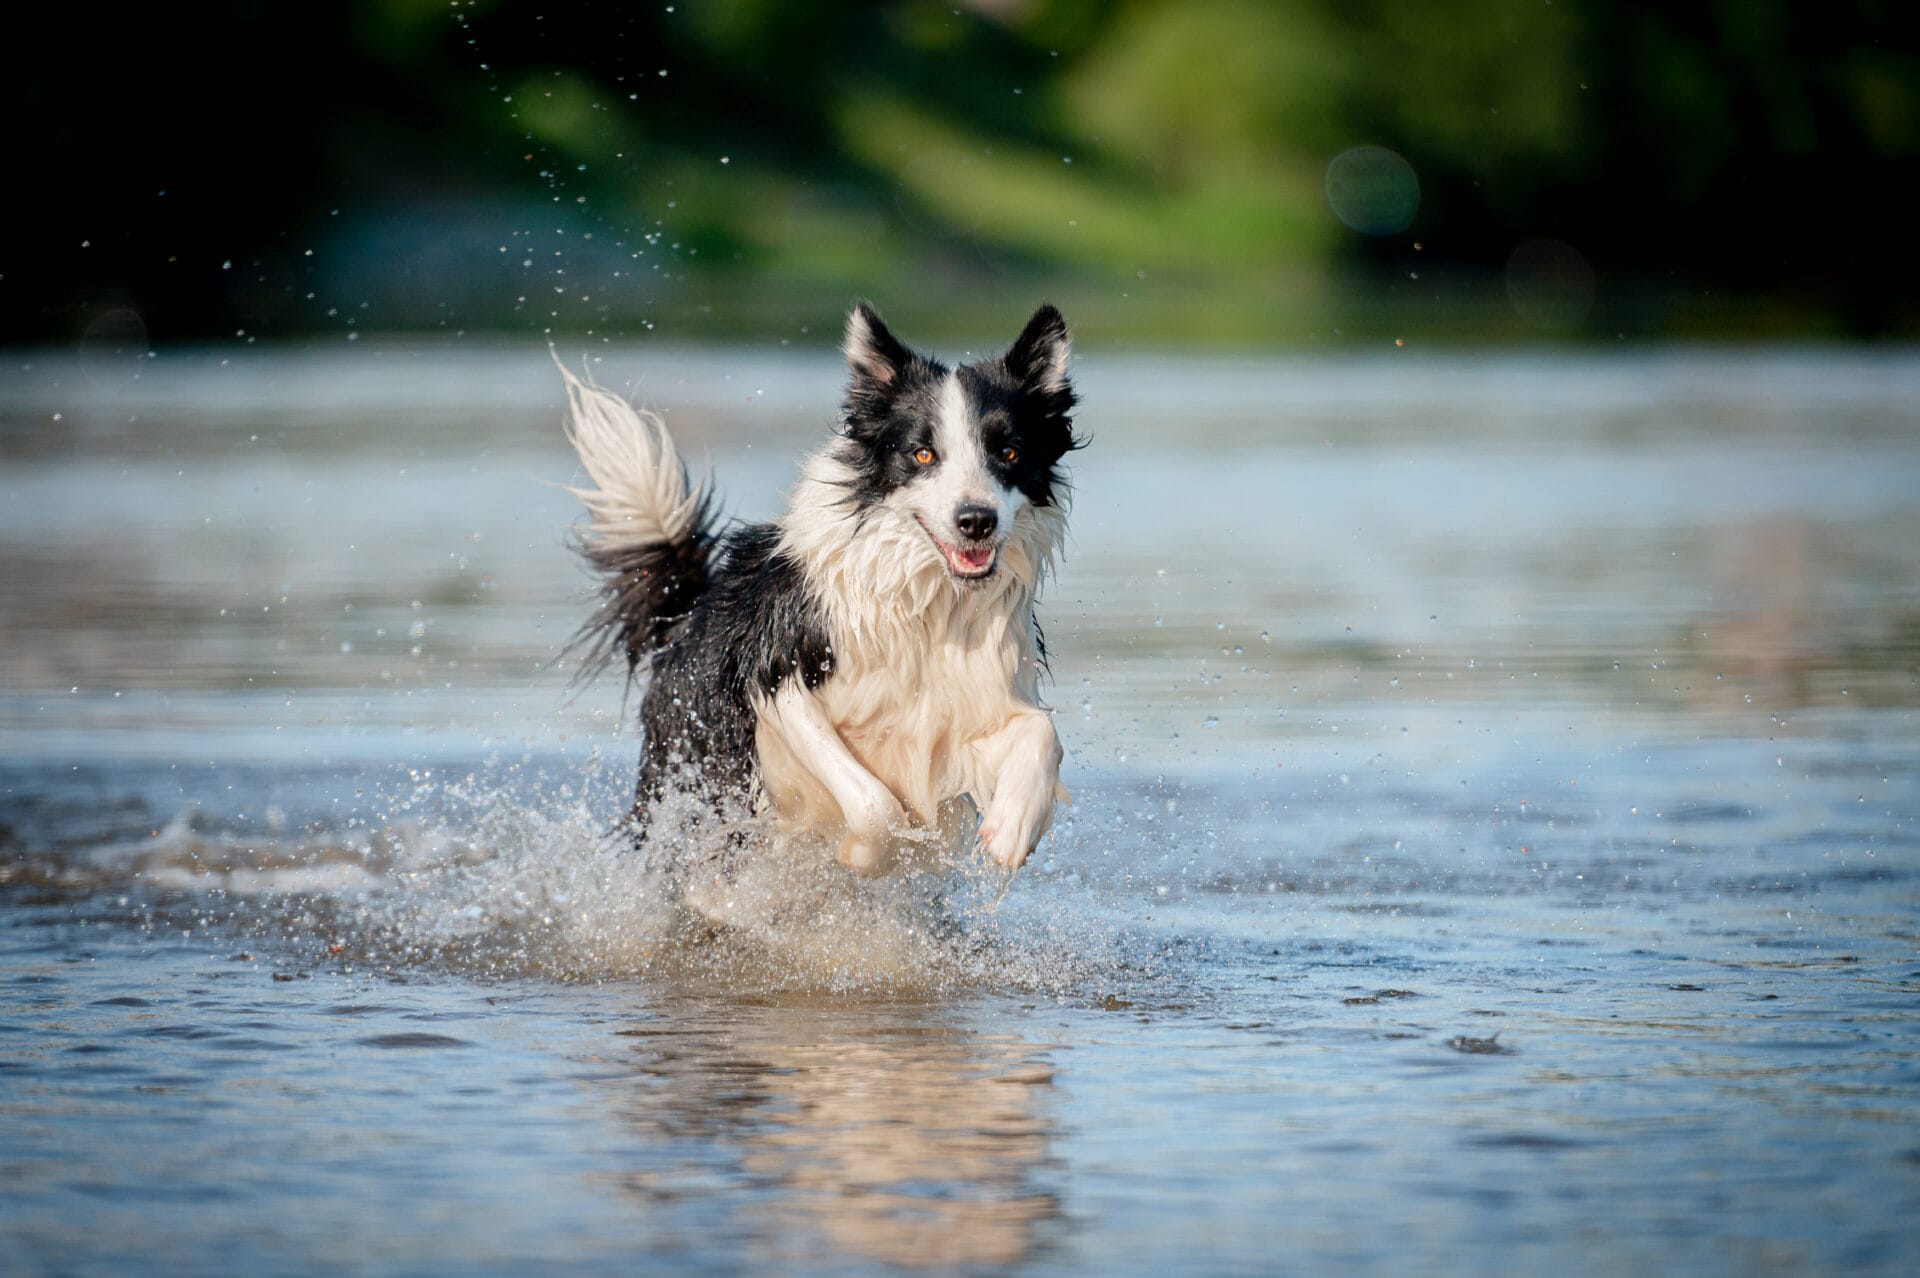 senior dog exercising in water by running